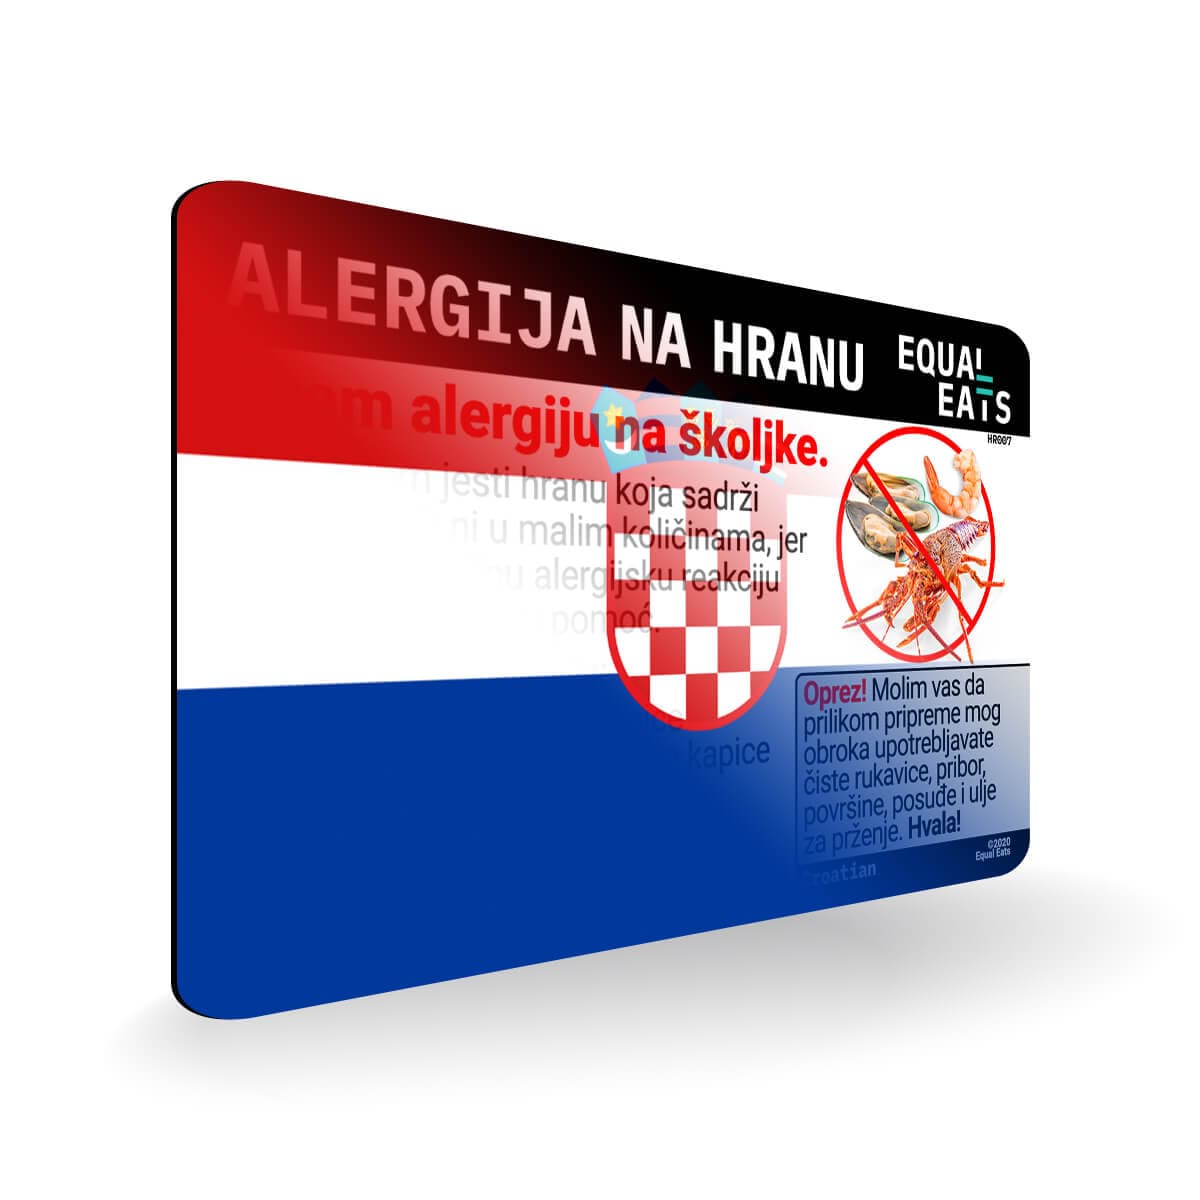 Shellfish Allergy in Croatian. Shellfish Allergy Card for Croatia